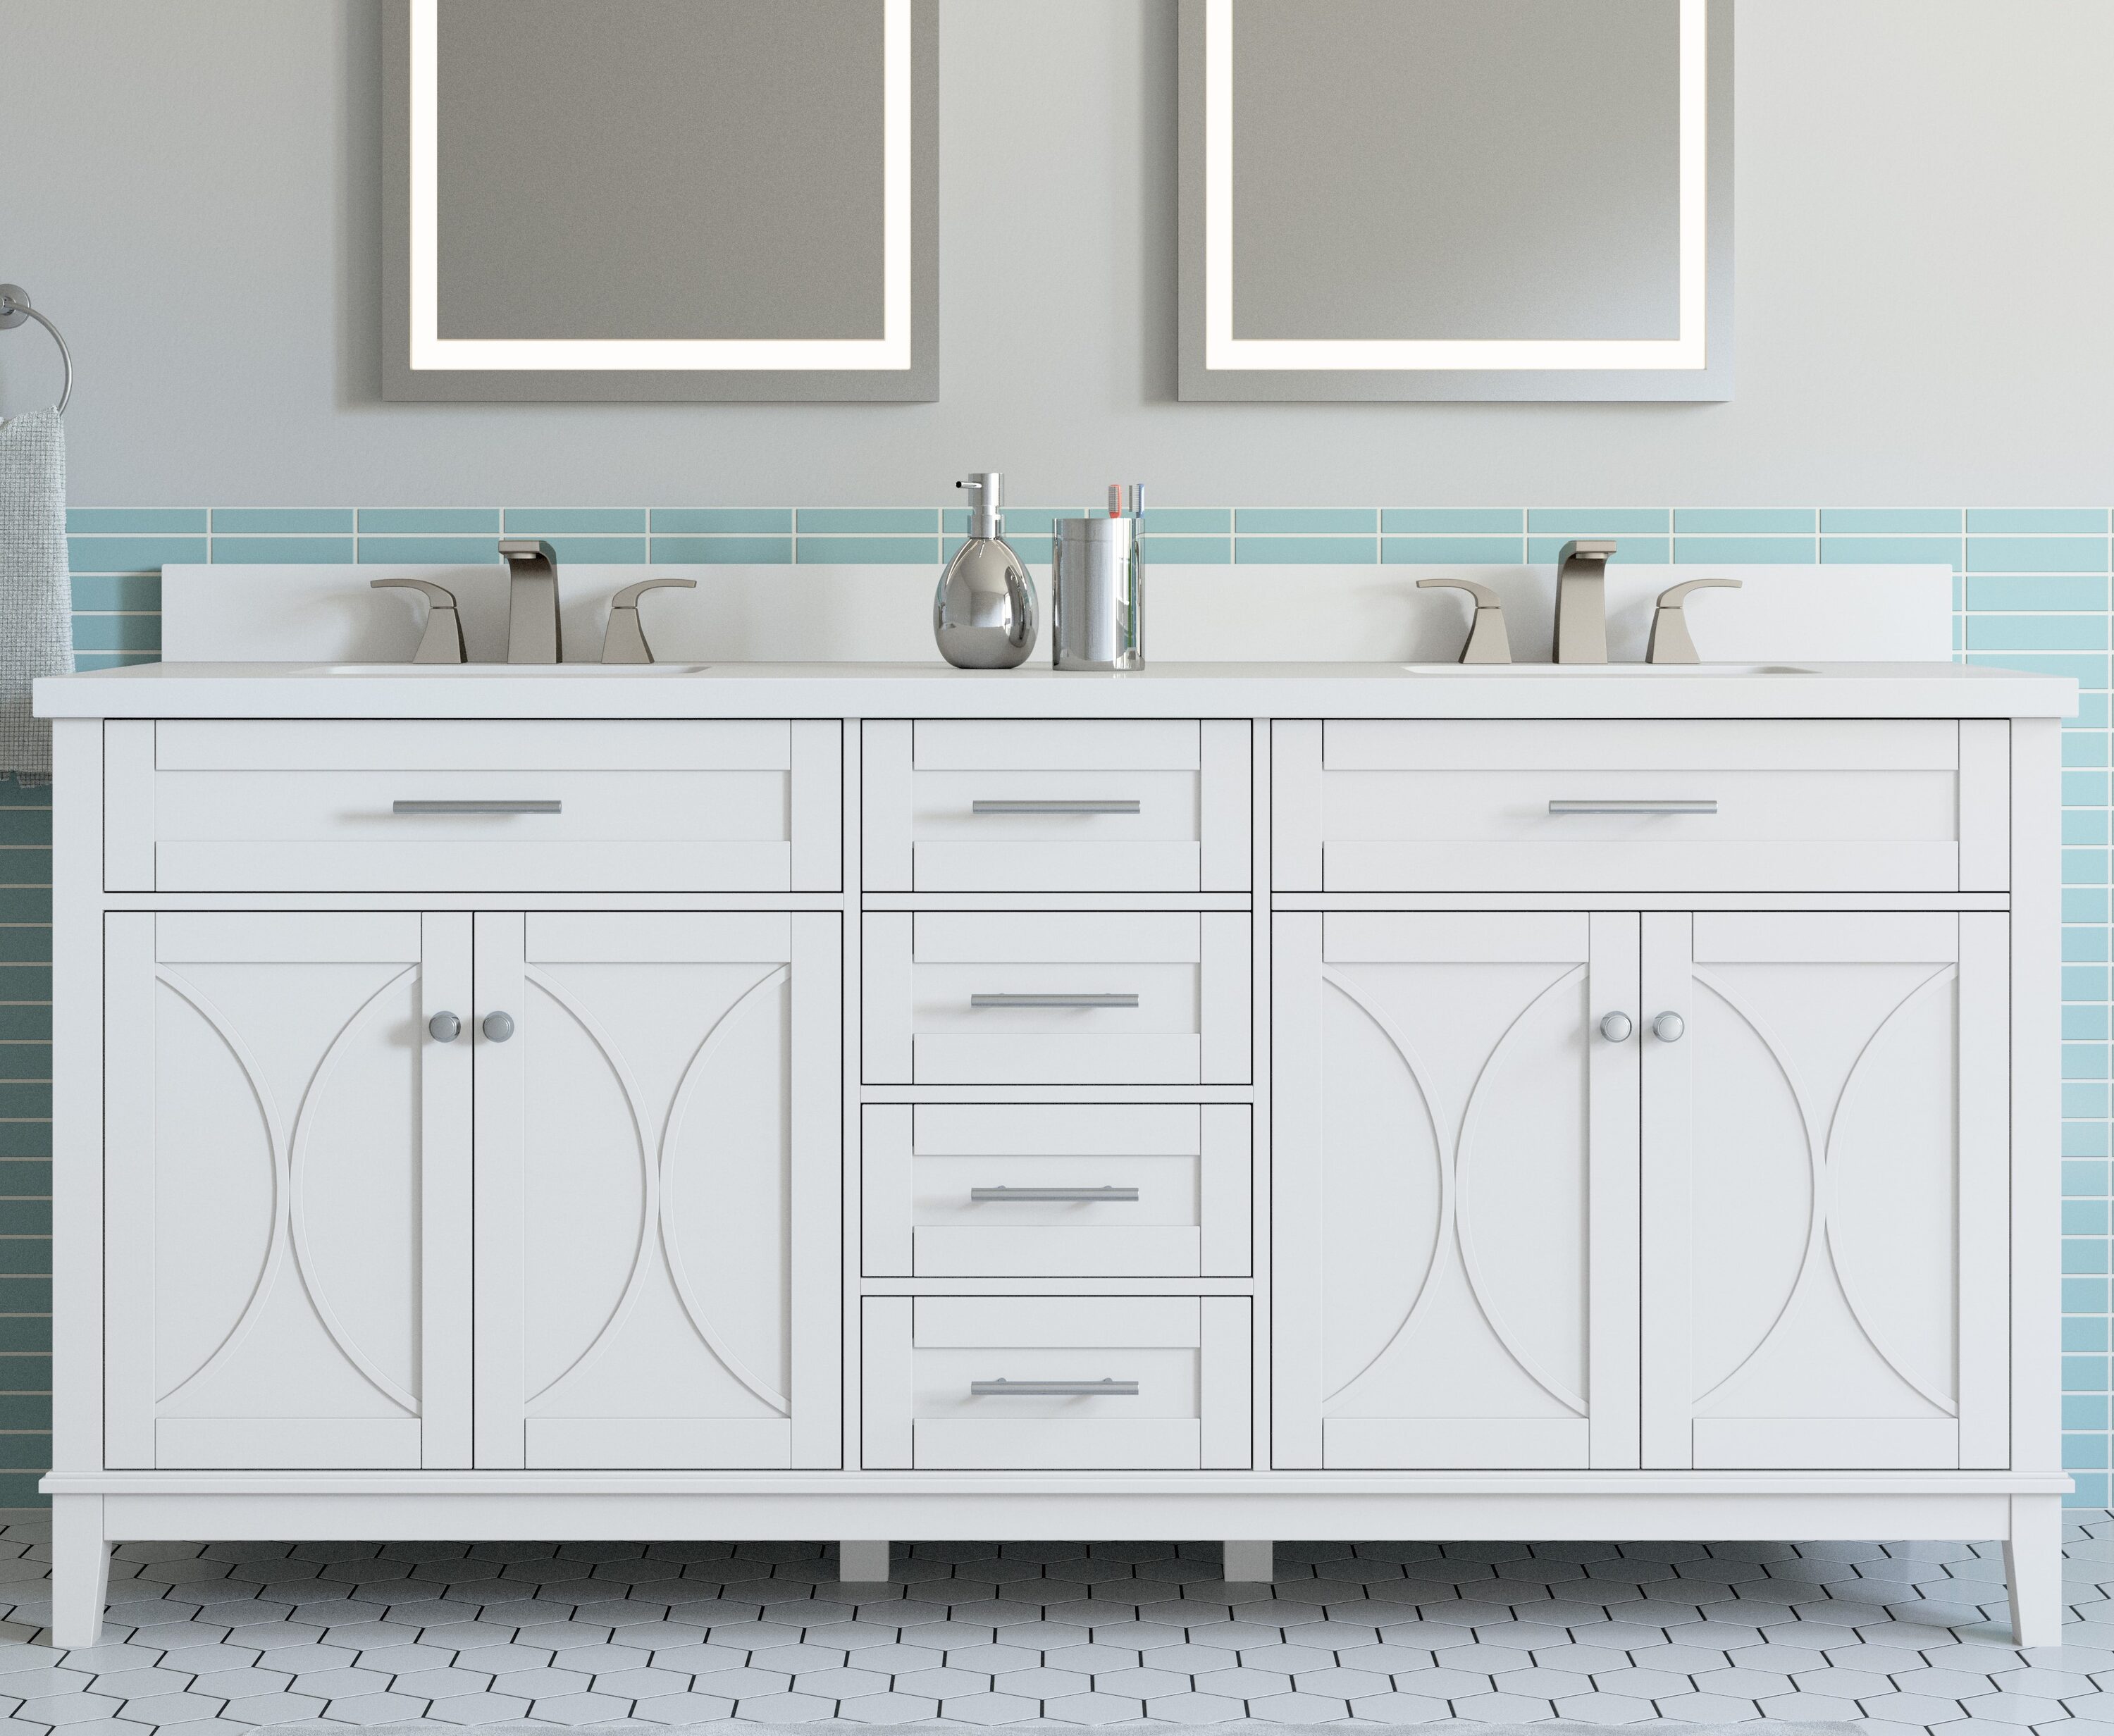 allen + roth Brinkhaven 20-in x 28-in White Framed Bathroom Vanity